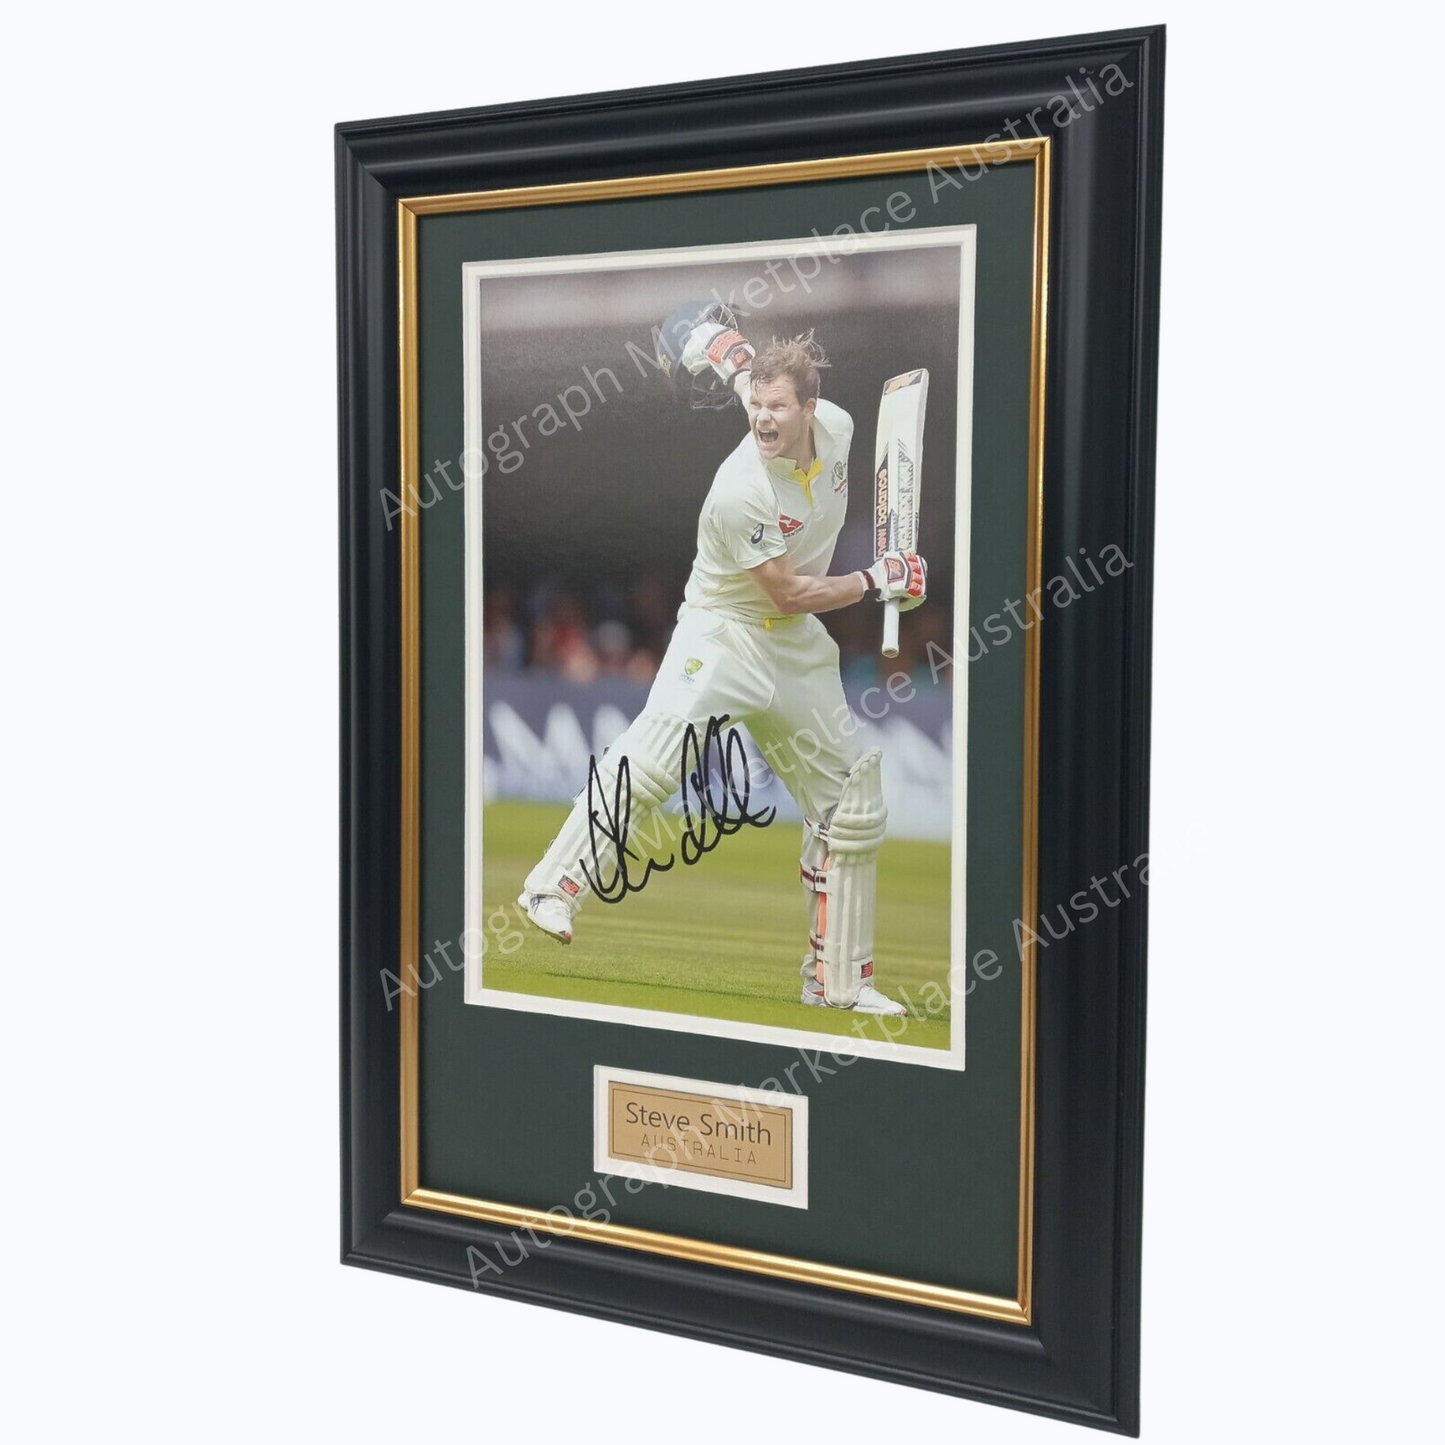 Steve Smith Signed Framed Cricket Australia Memorabilia